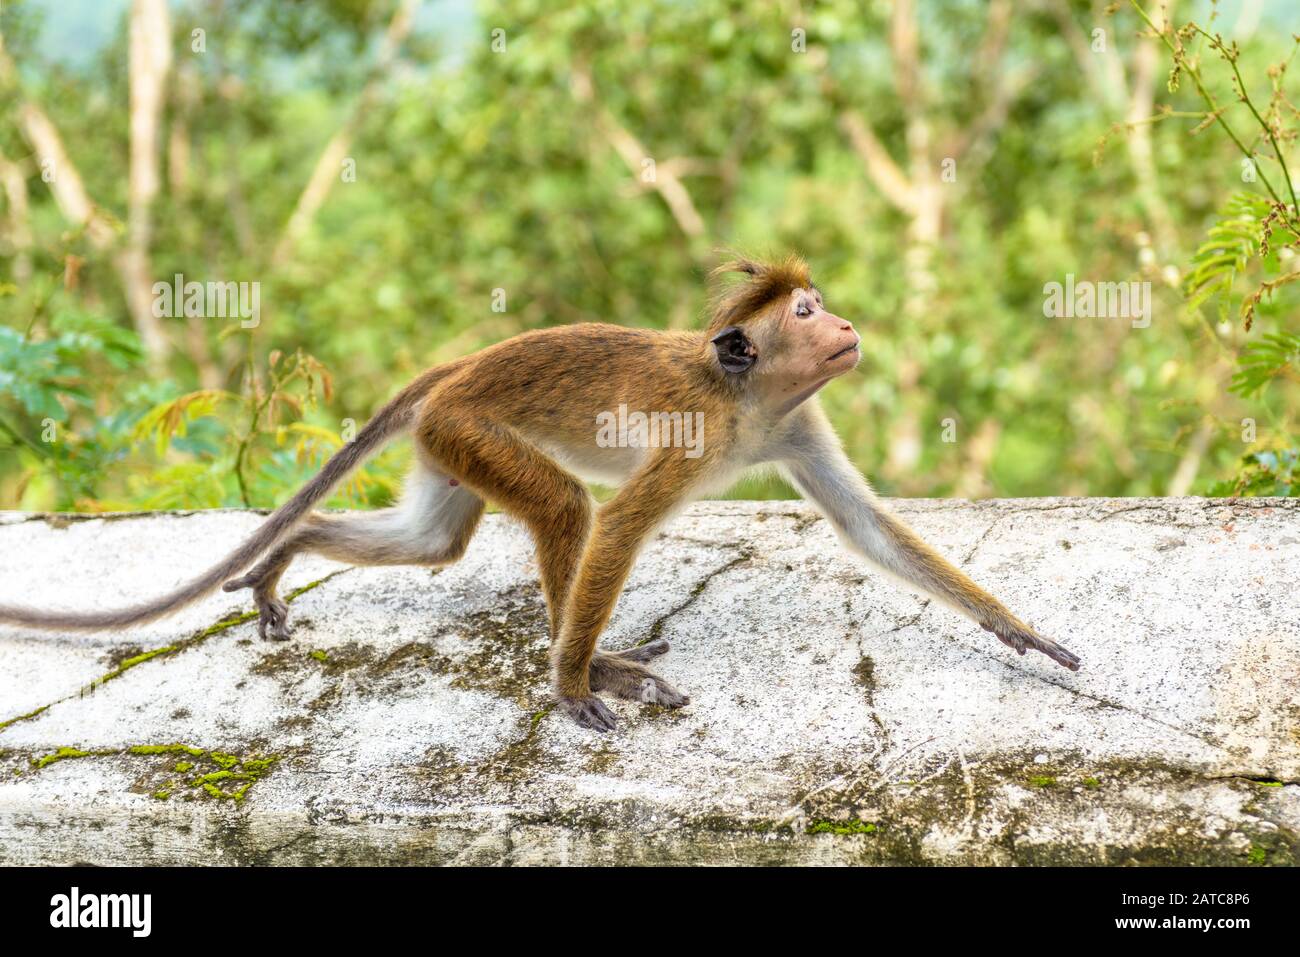 The monkey runs along the wall of the ancient Buddhist rock temple in Mulkirigala, Sri Lanka. Stock Photo